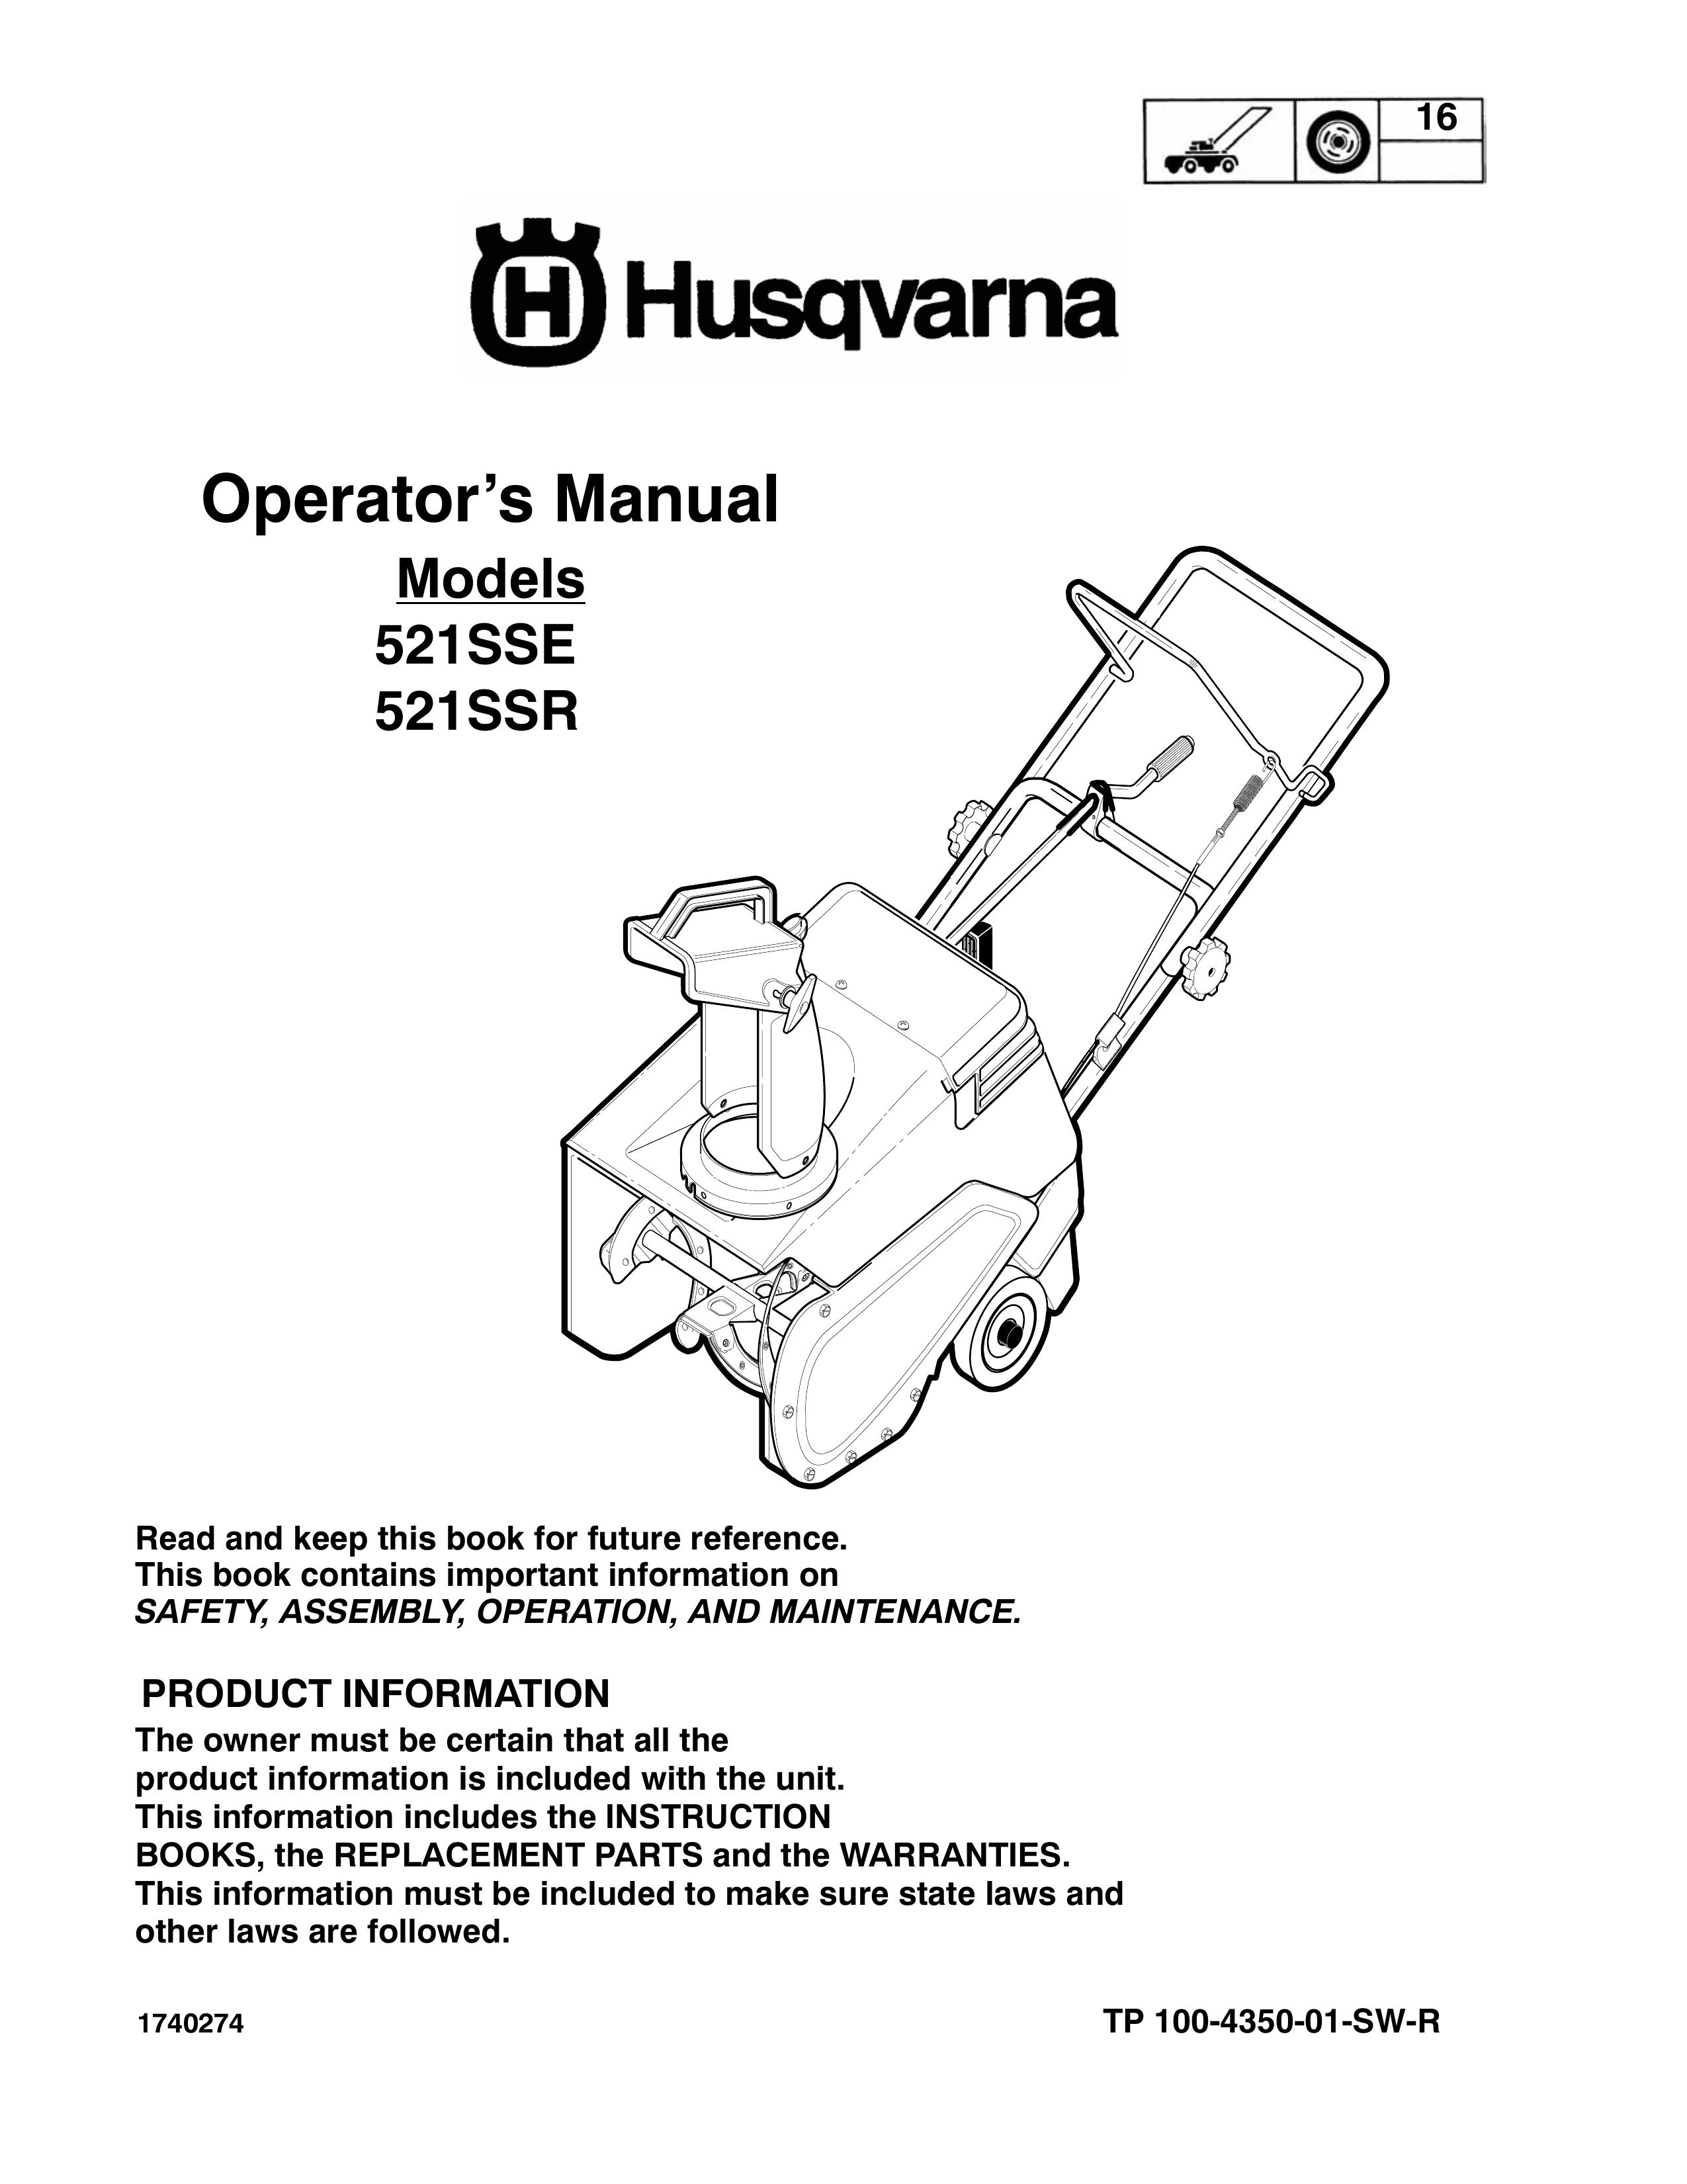 Husqvarna 521SSR Snow Blower User Manual